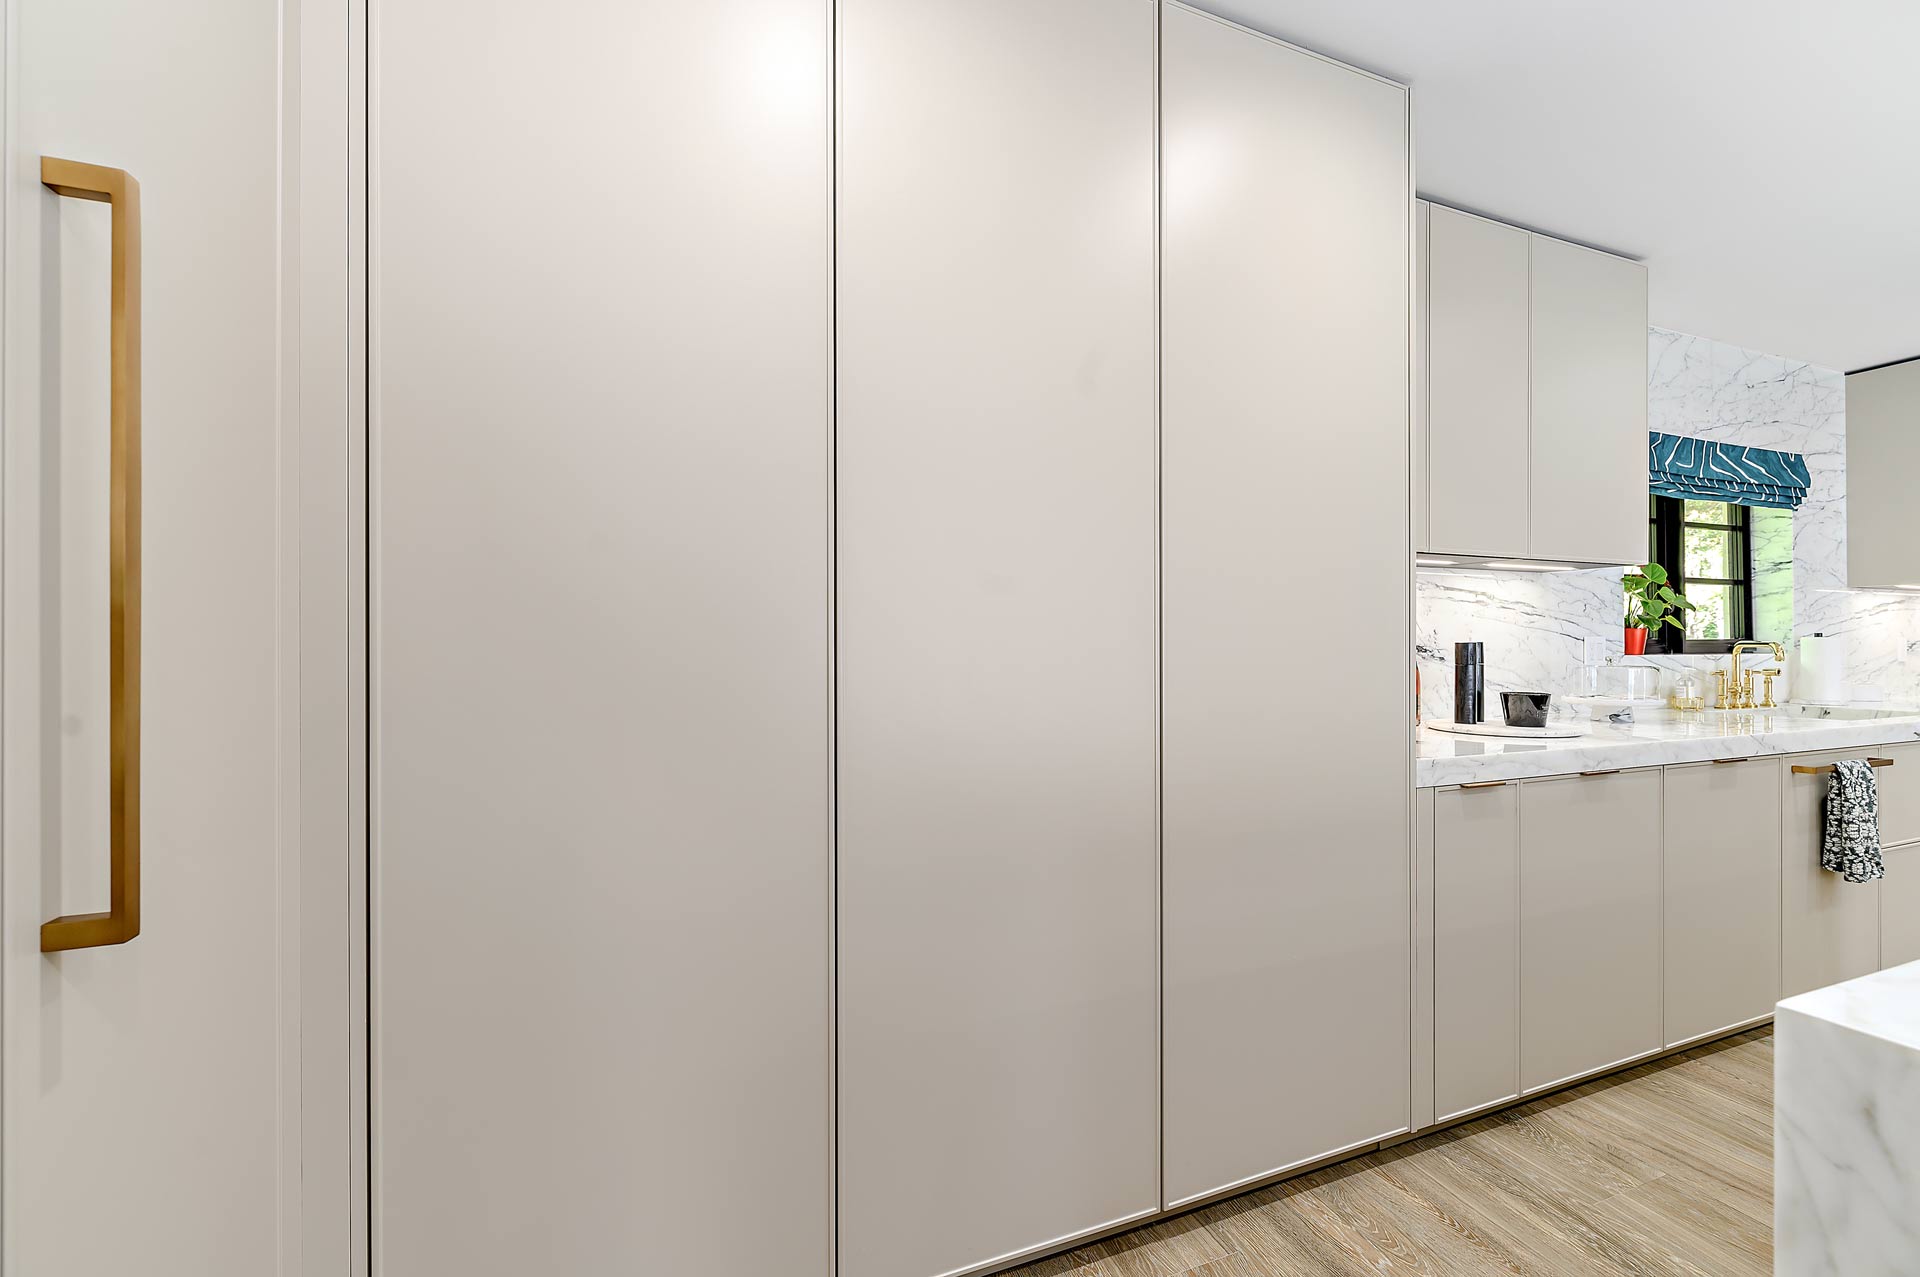 Deluxe kitchen cabinet